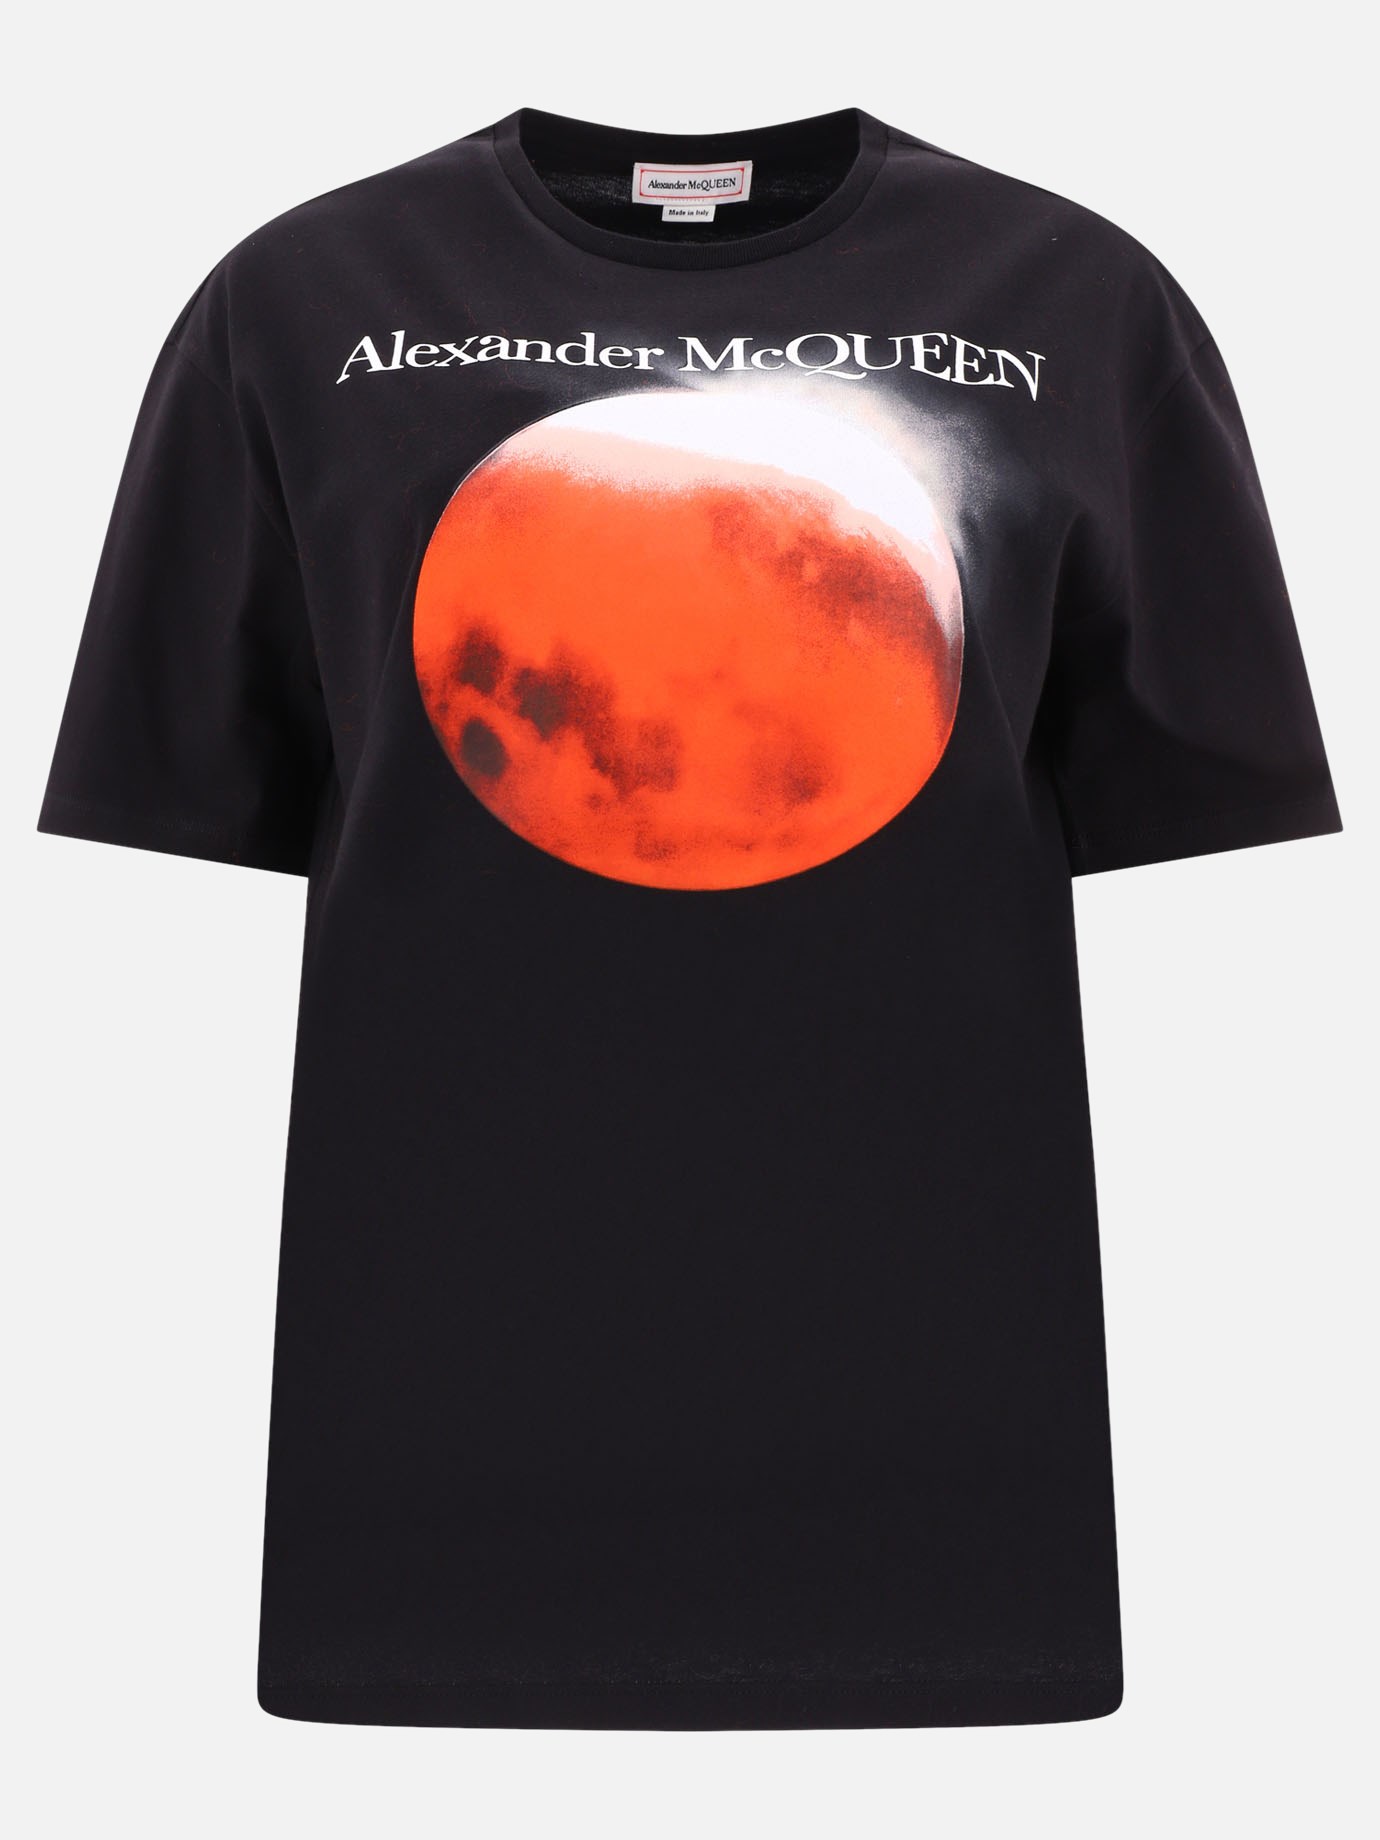  Red Moon  t-shirtby Alexander McQueen - 2